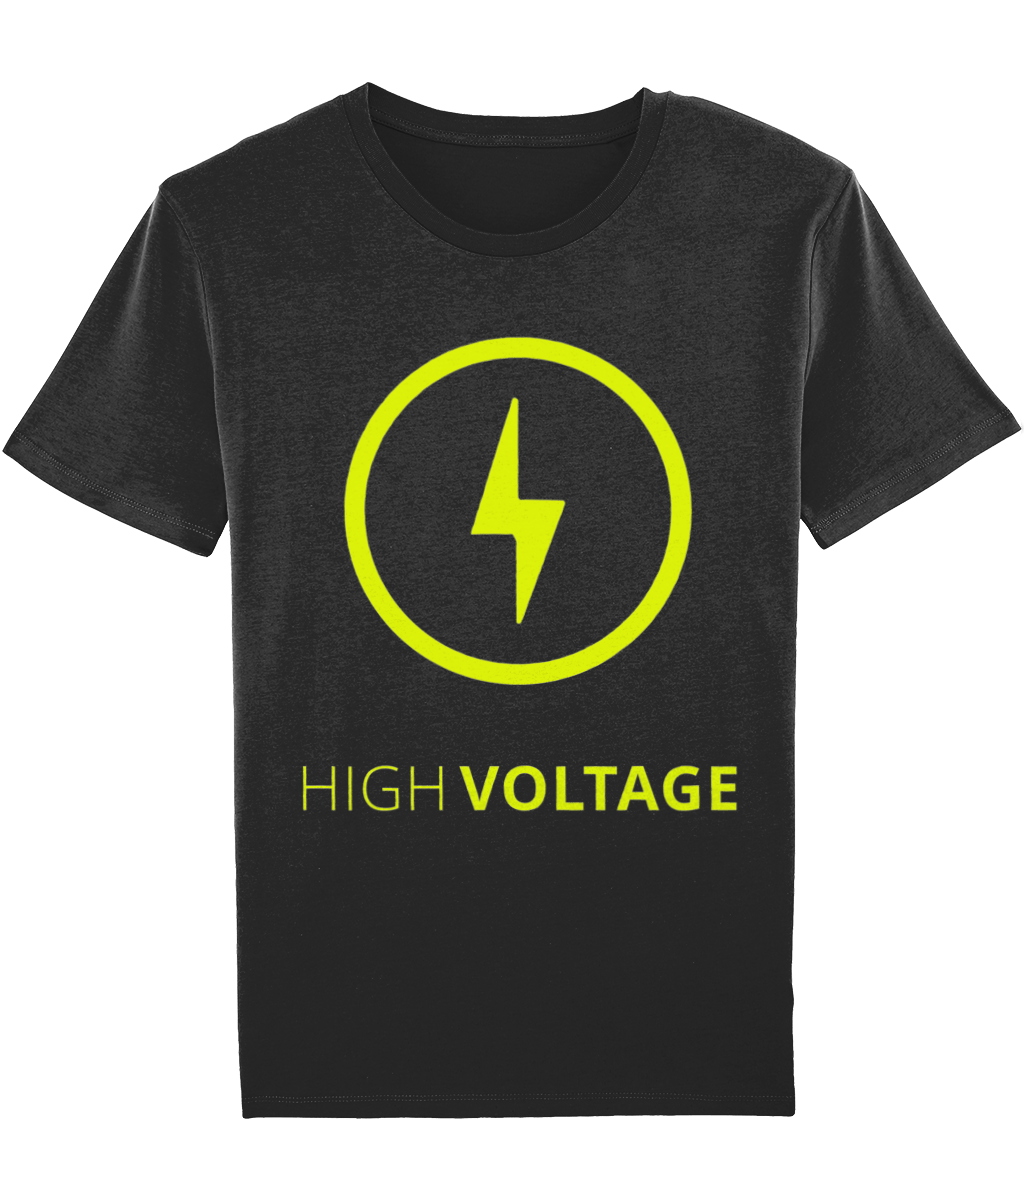 High Voltage Men's T-Shirt